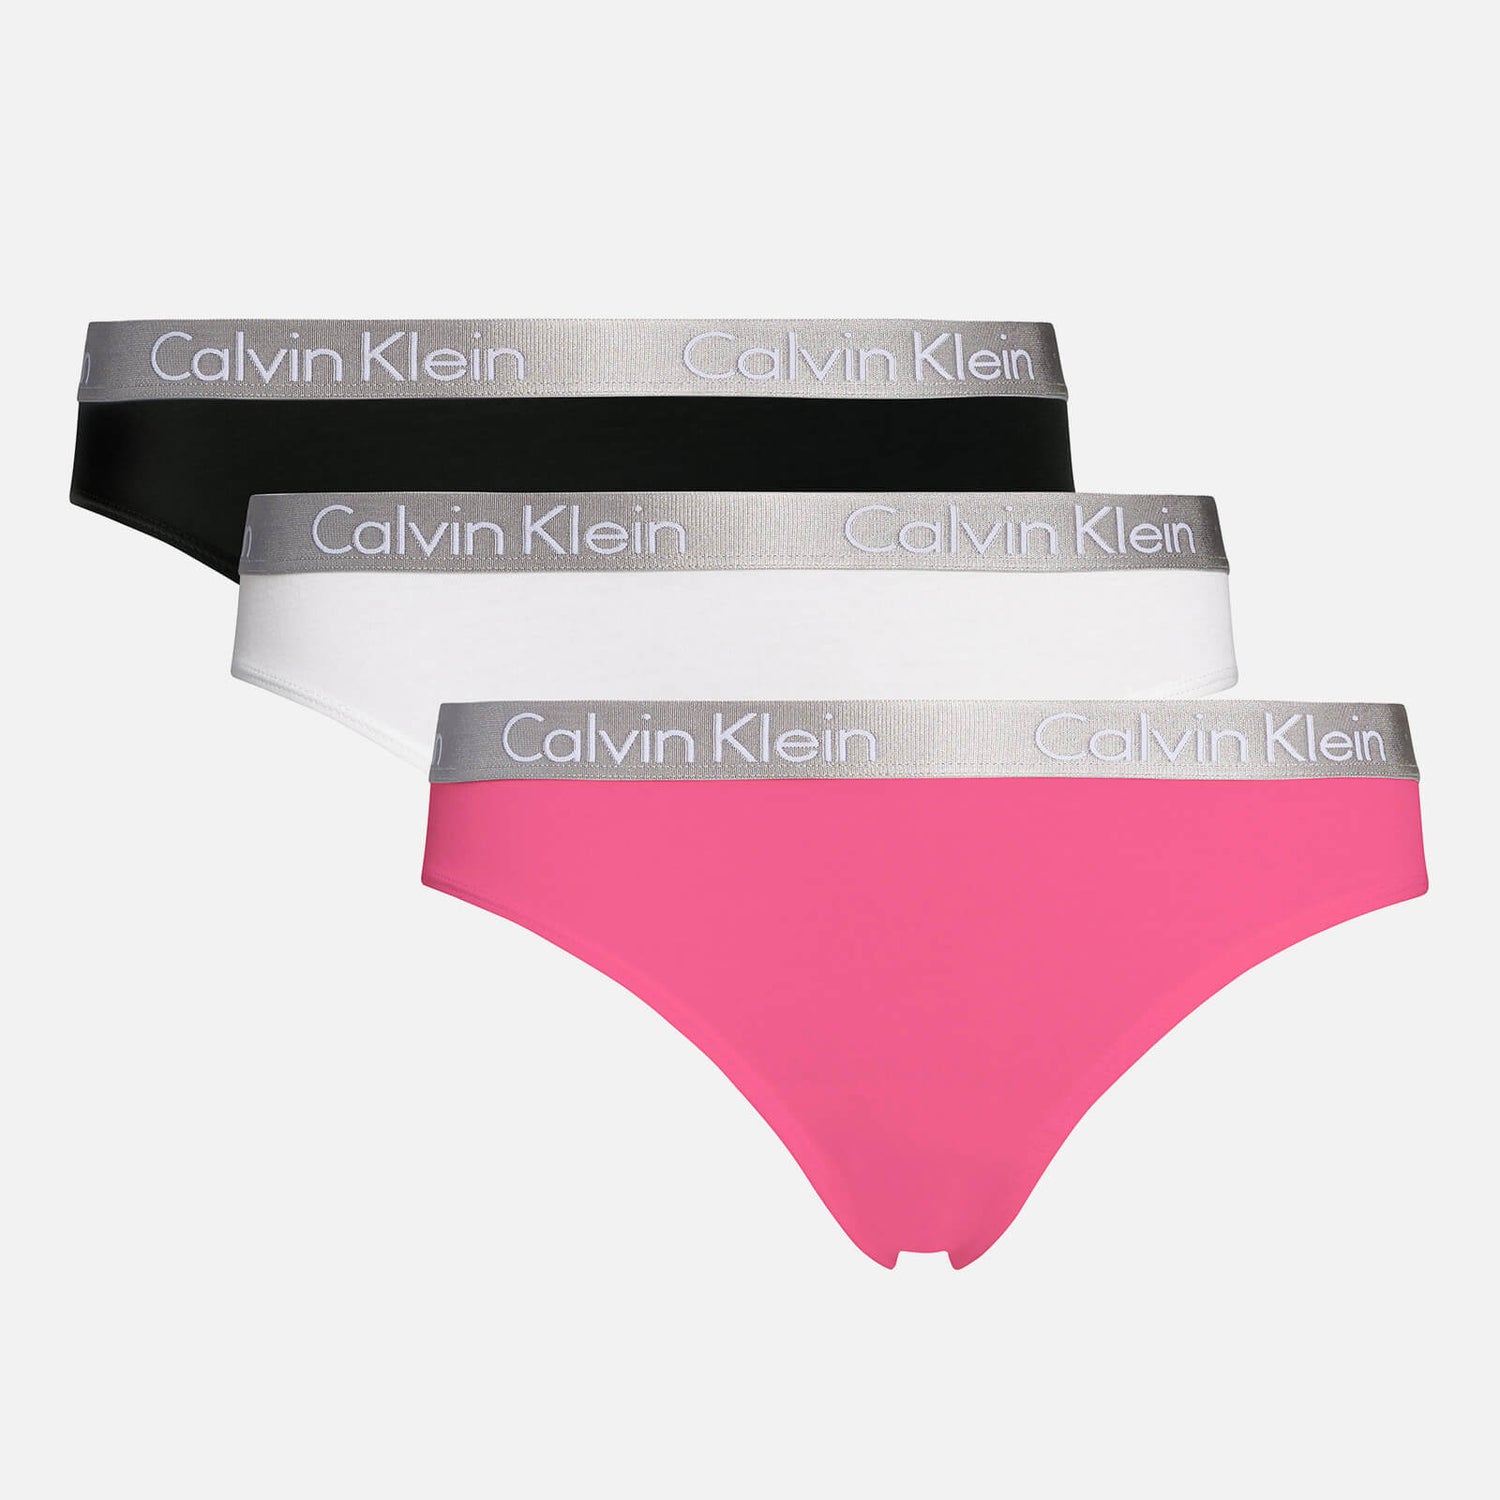 Calvin Klein Women's Bikini 3 Pack - Black/White/Pink